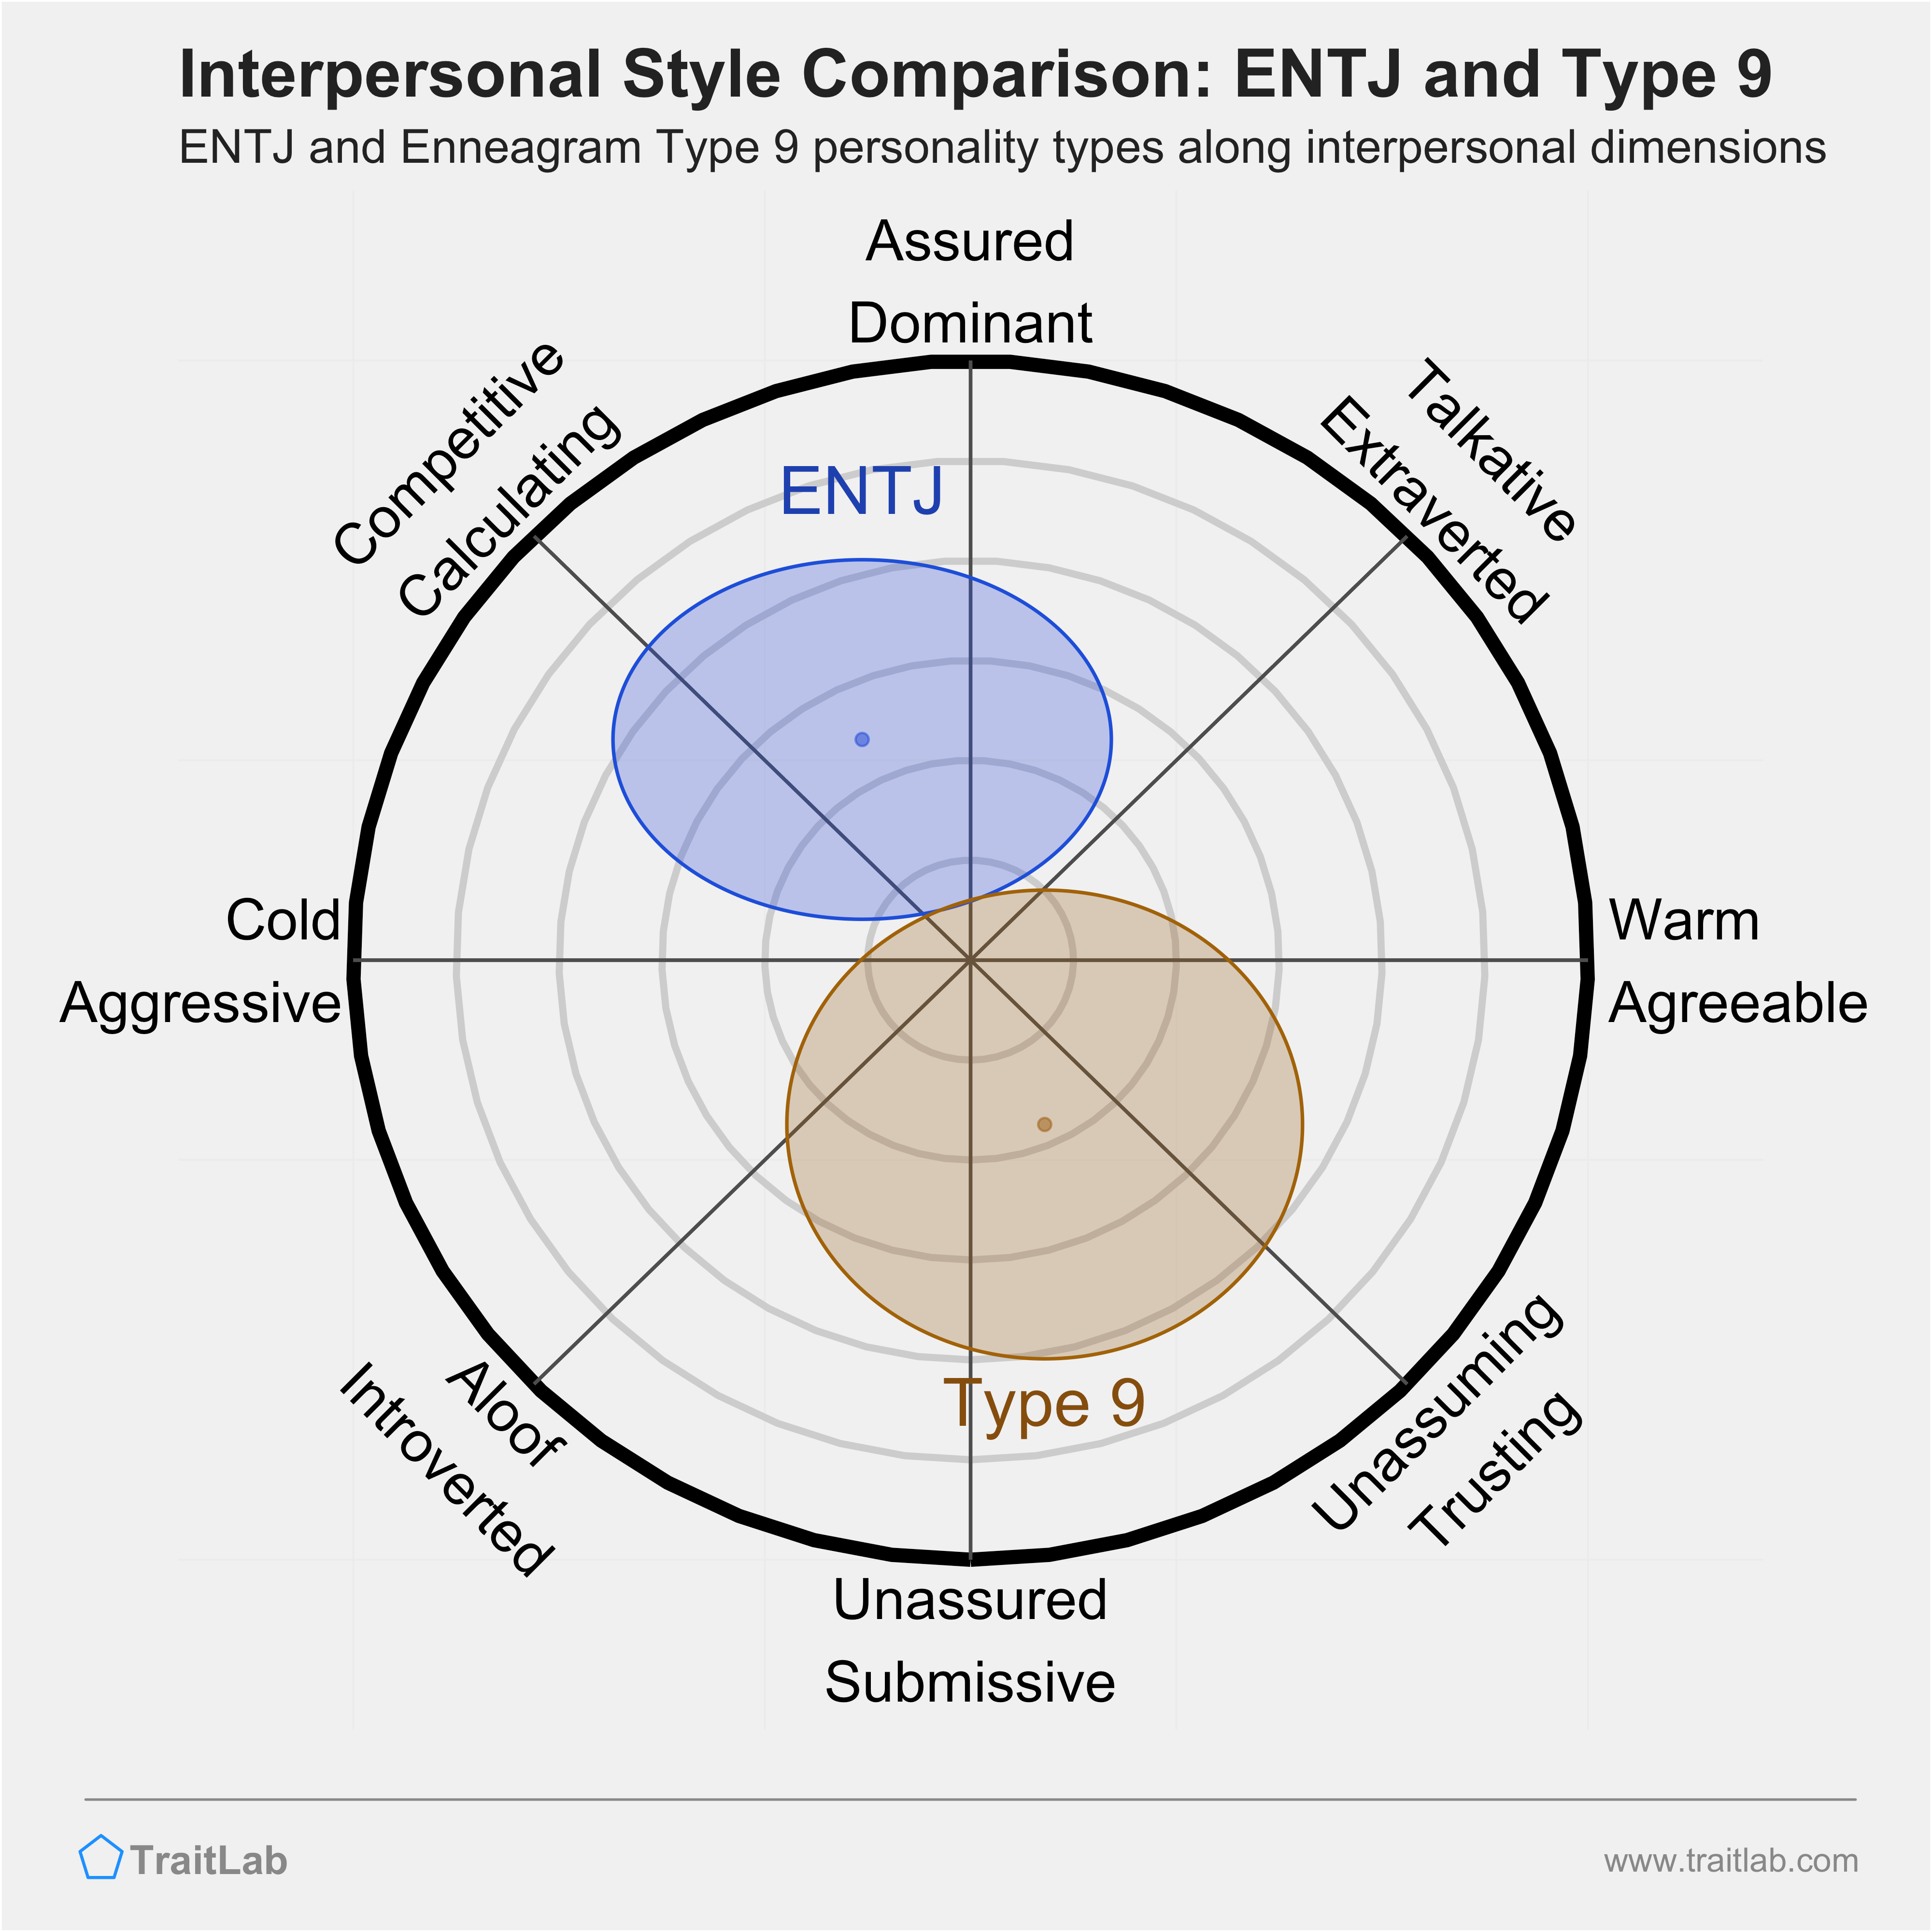 Enneagram ENTJ and Type 9 comparison across interpersonal dimensions